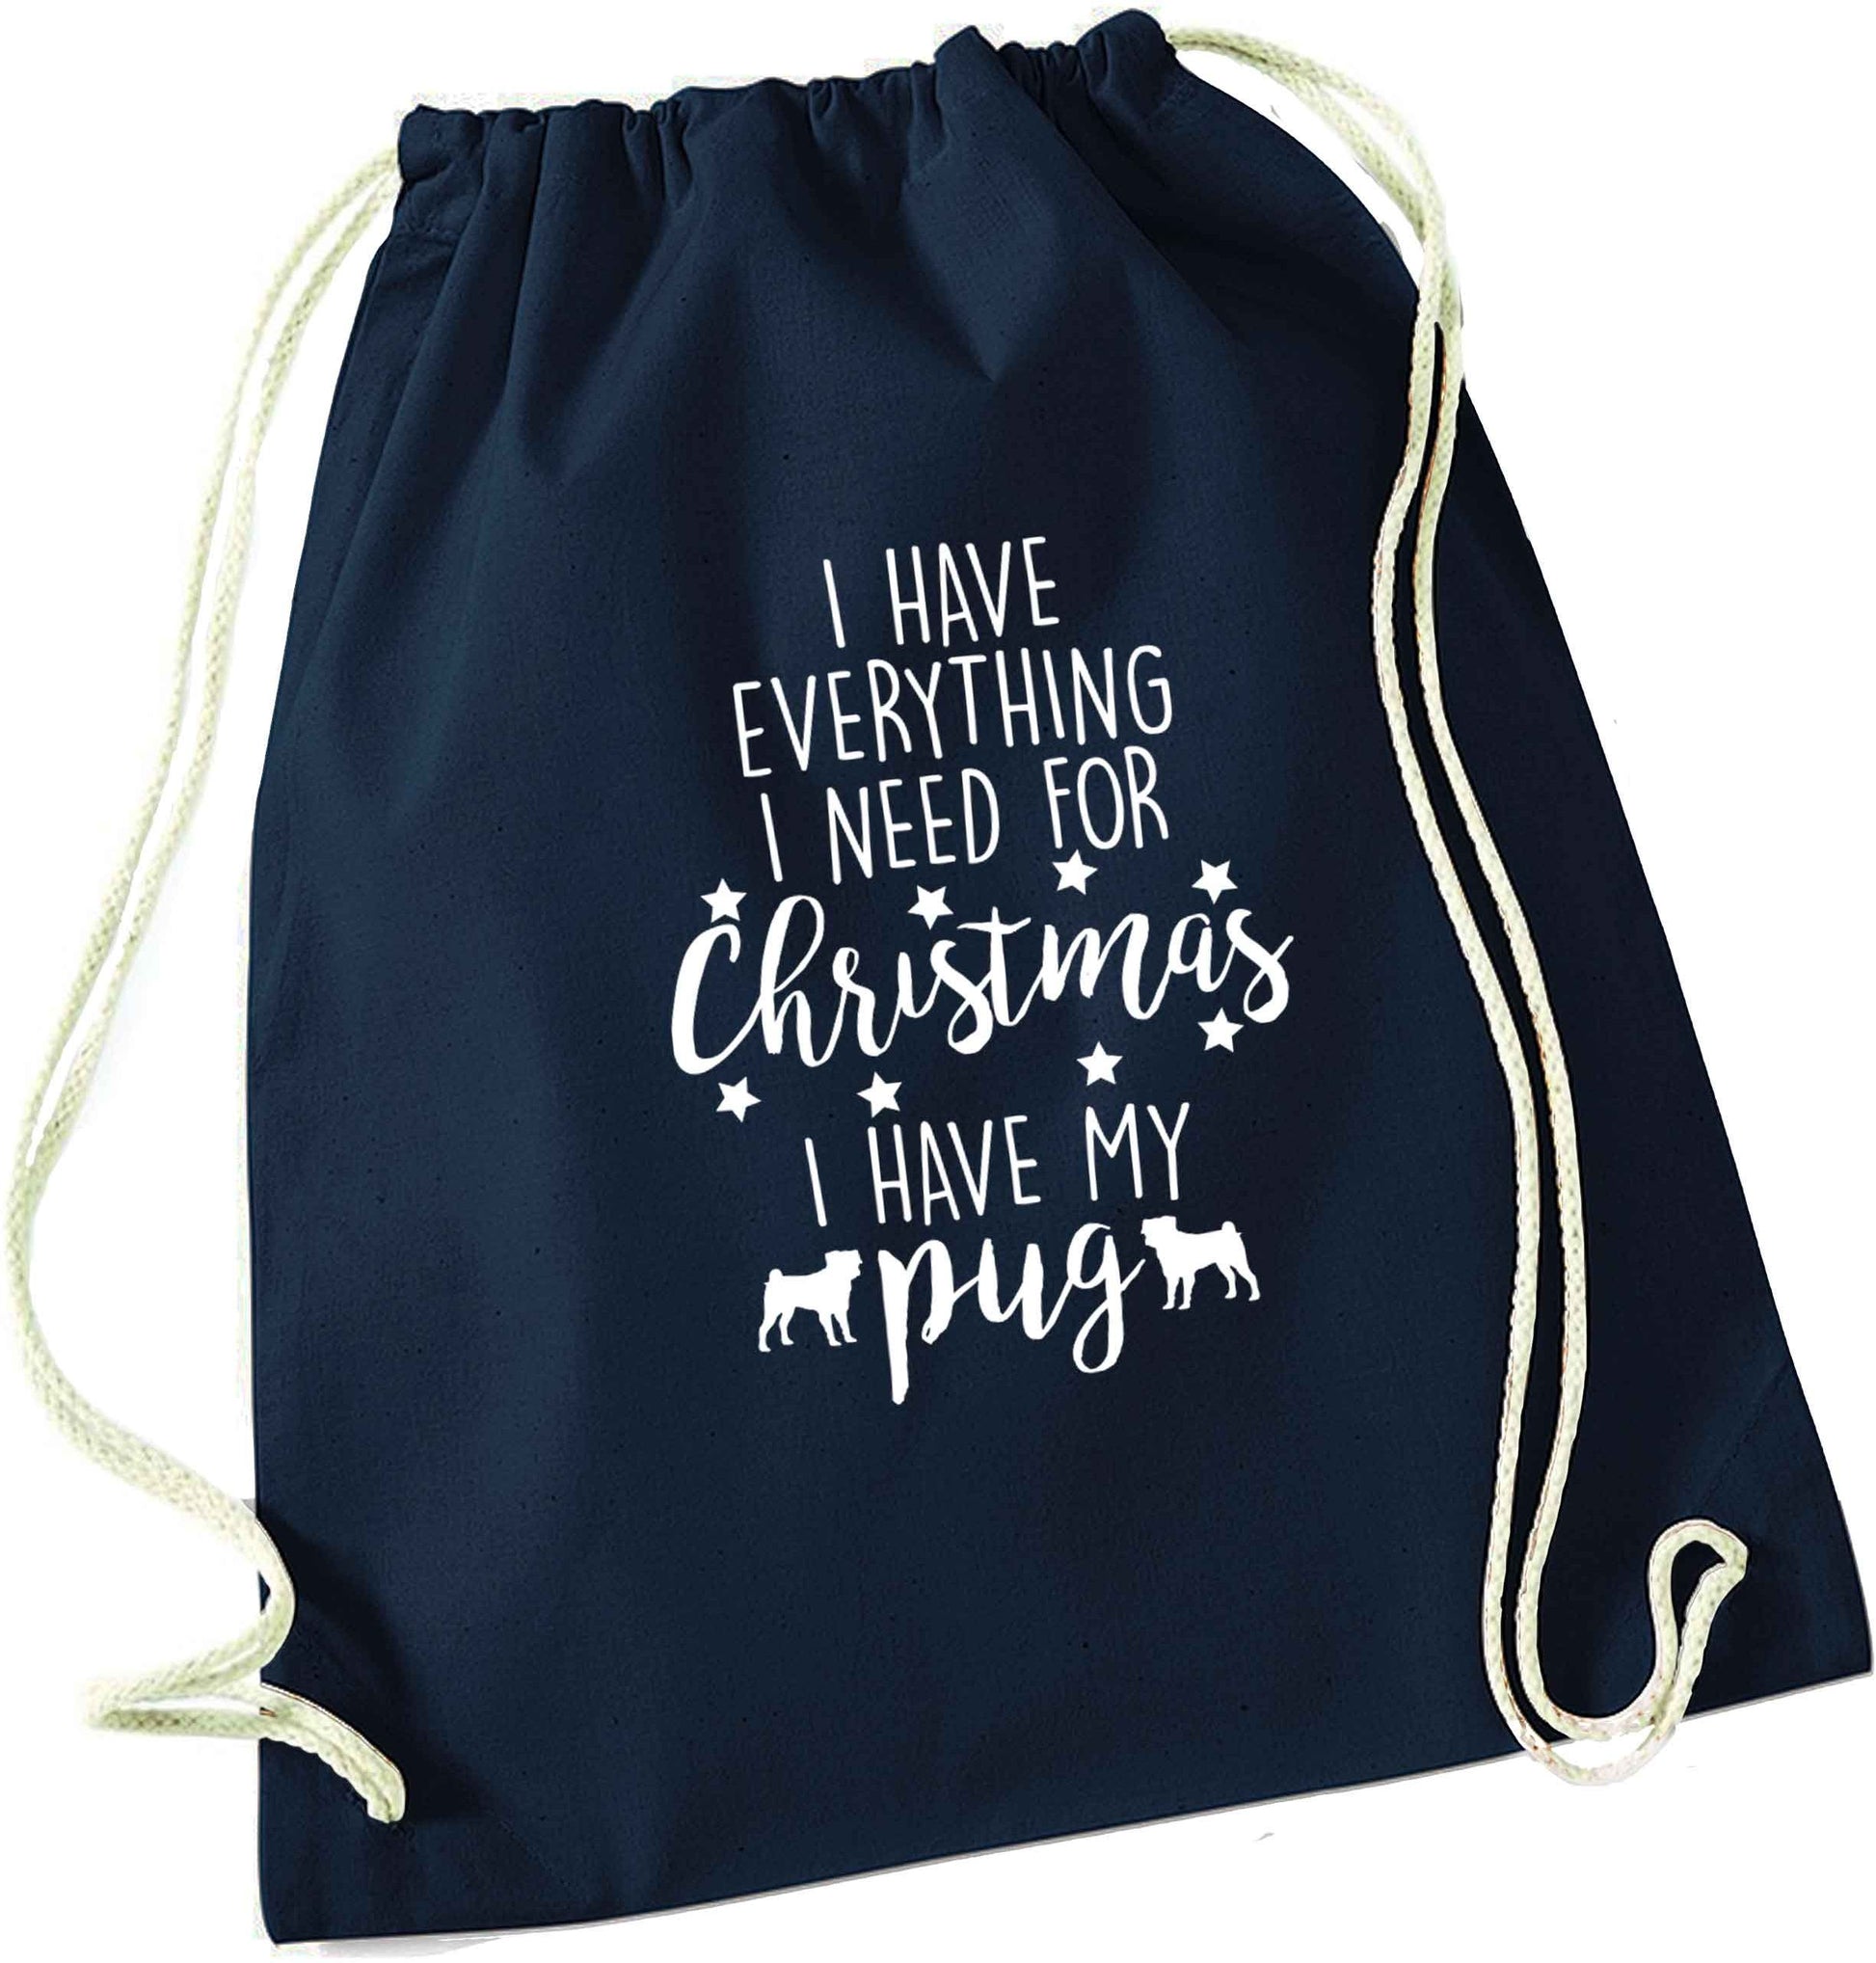 I have everything I need for Christmas I have my pug navy drawstring bag